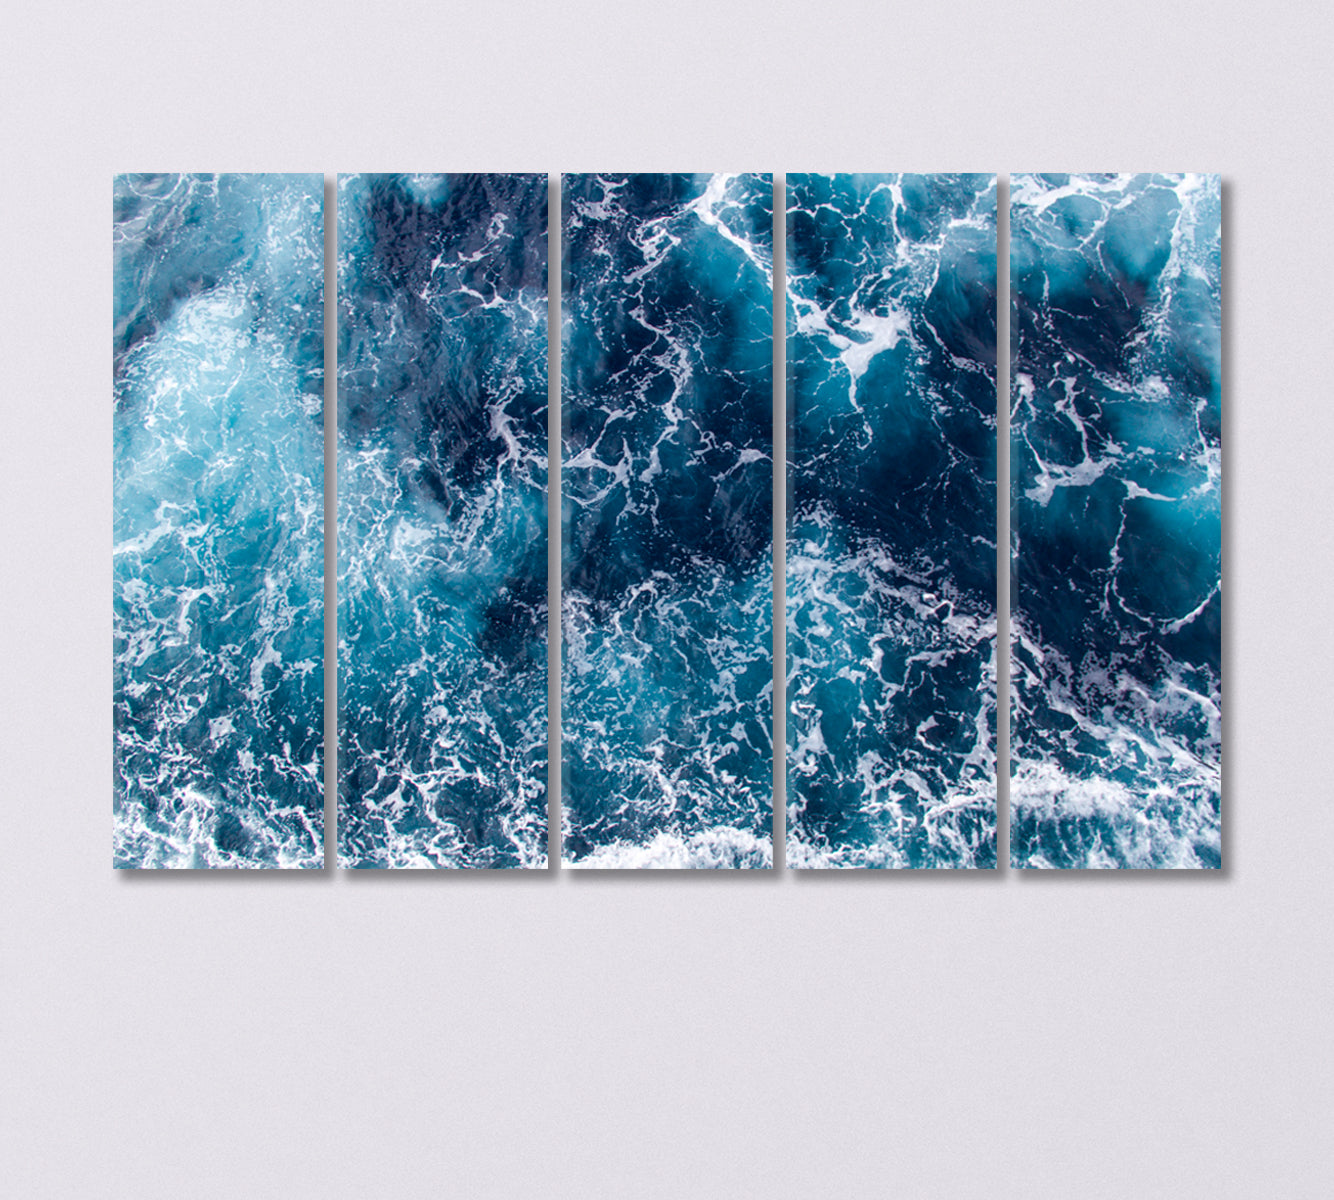 Blue Sea Waves with Foam Canvas Print-Canvas Print-CetArt-5 Panels-36x24 inches-CetArt